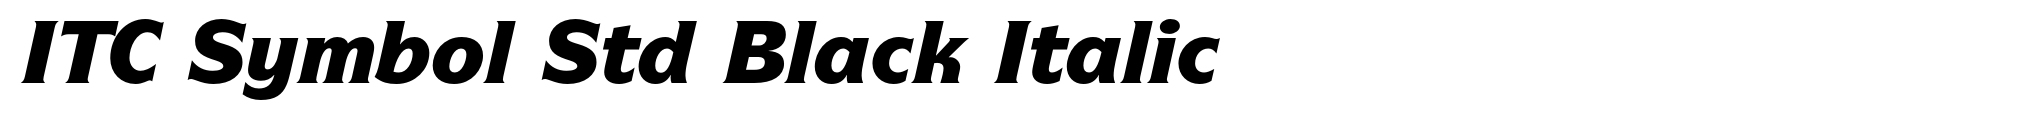 ITC Symbol Std Black Italic image